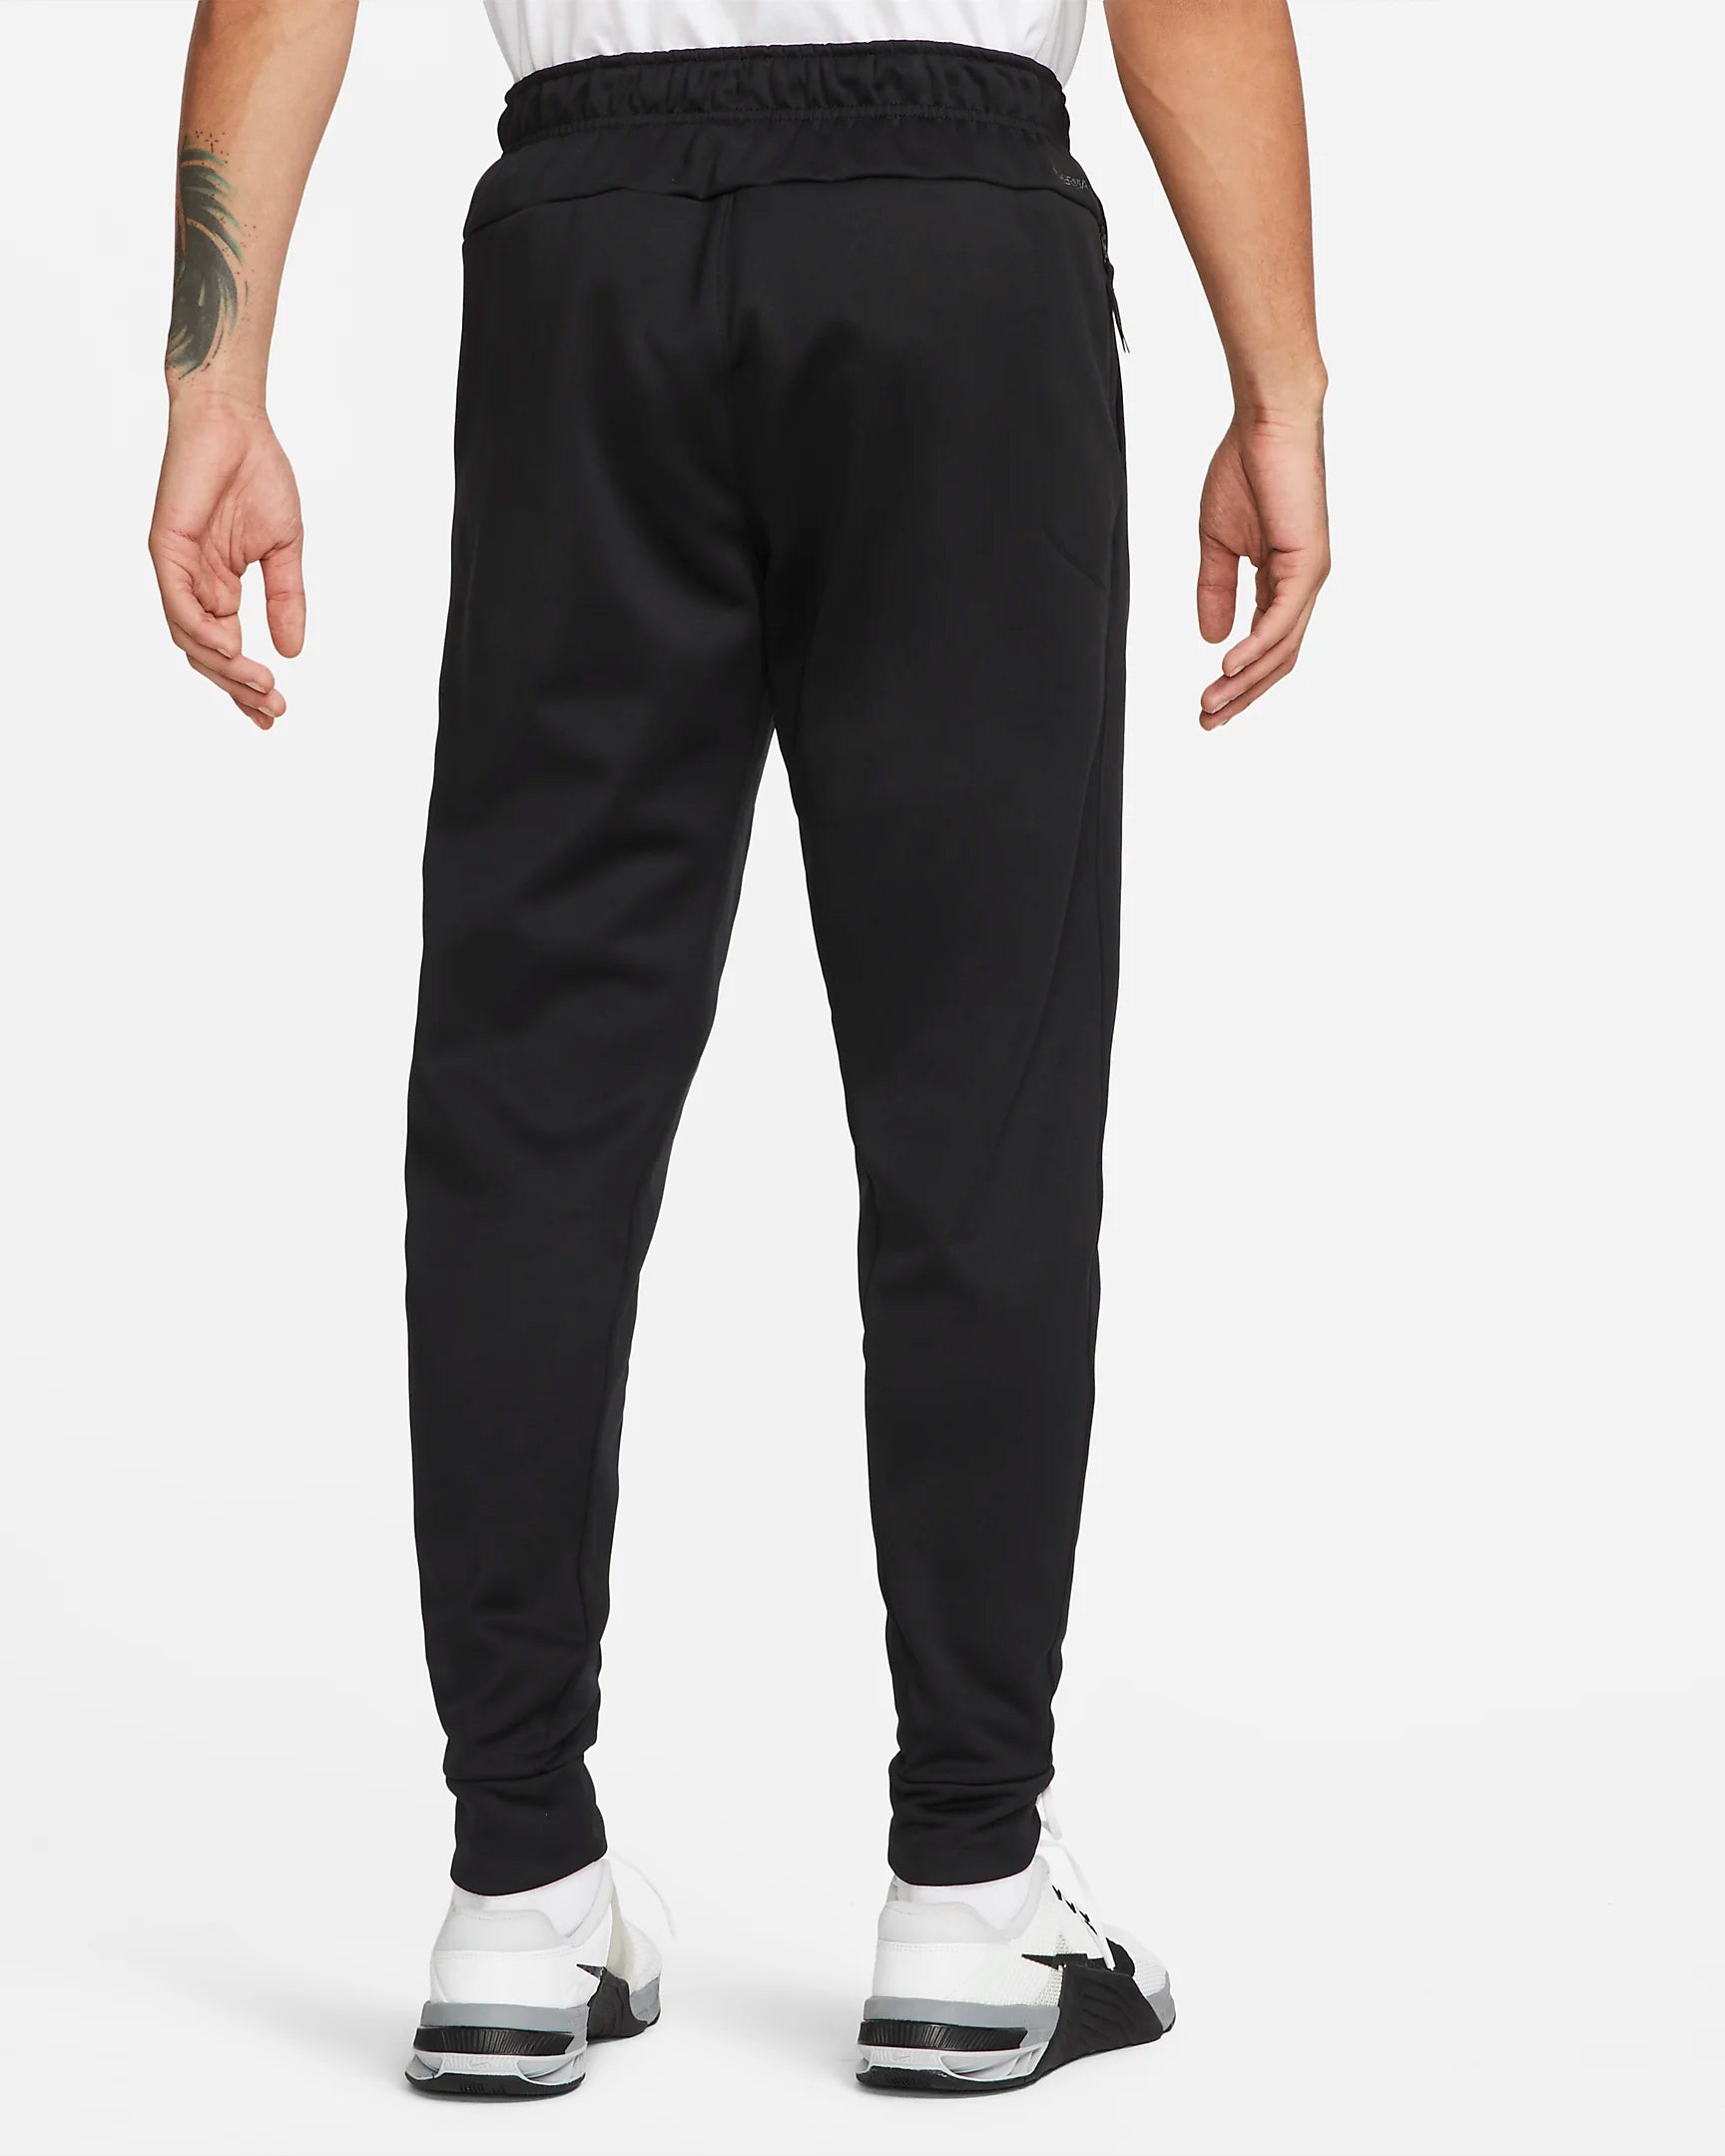 Nike Therma Pants - Black